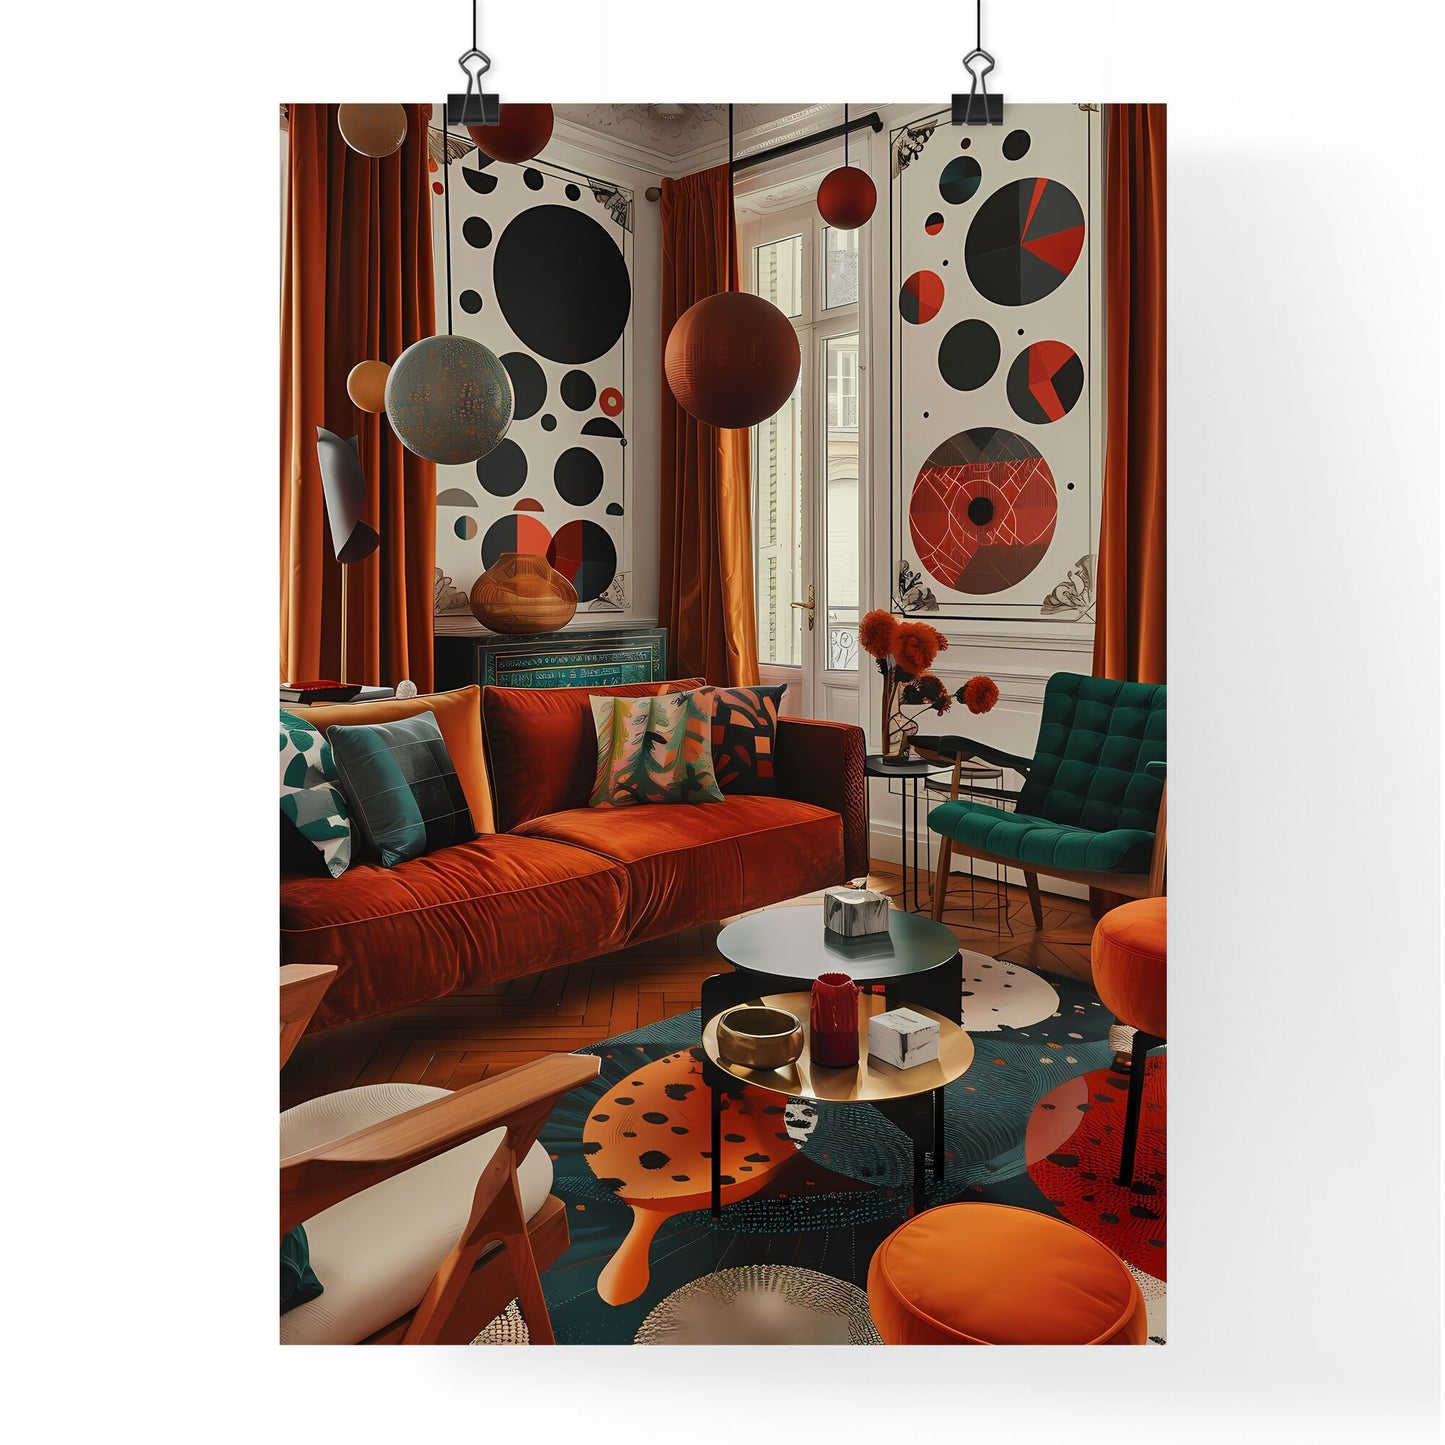 Abstract Art Poster: Striking Orange and Black Decor in Modern Living Room Default Title